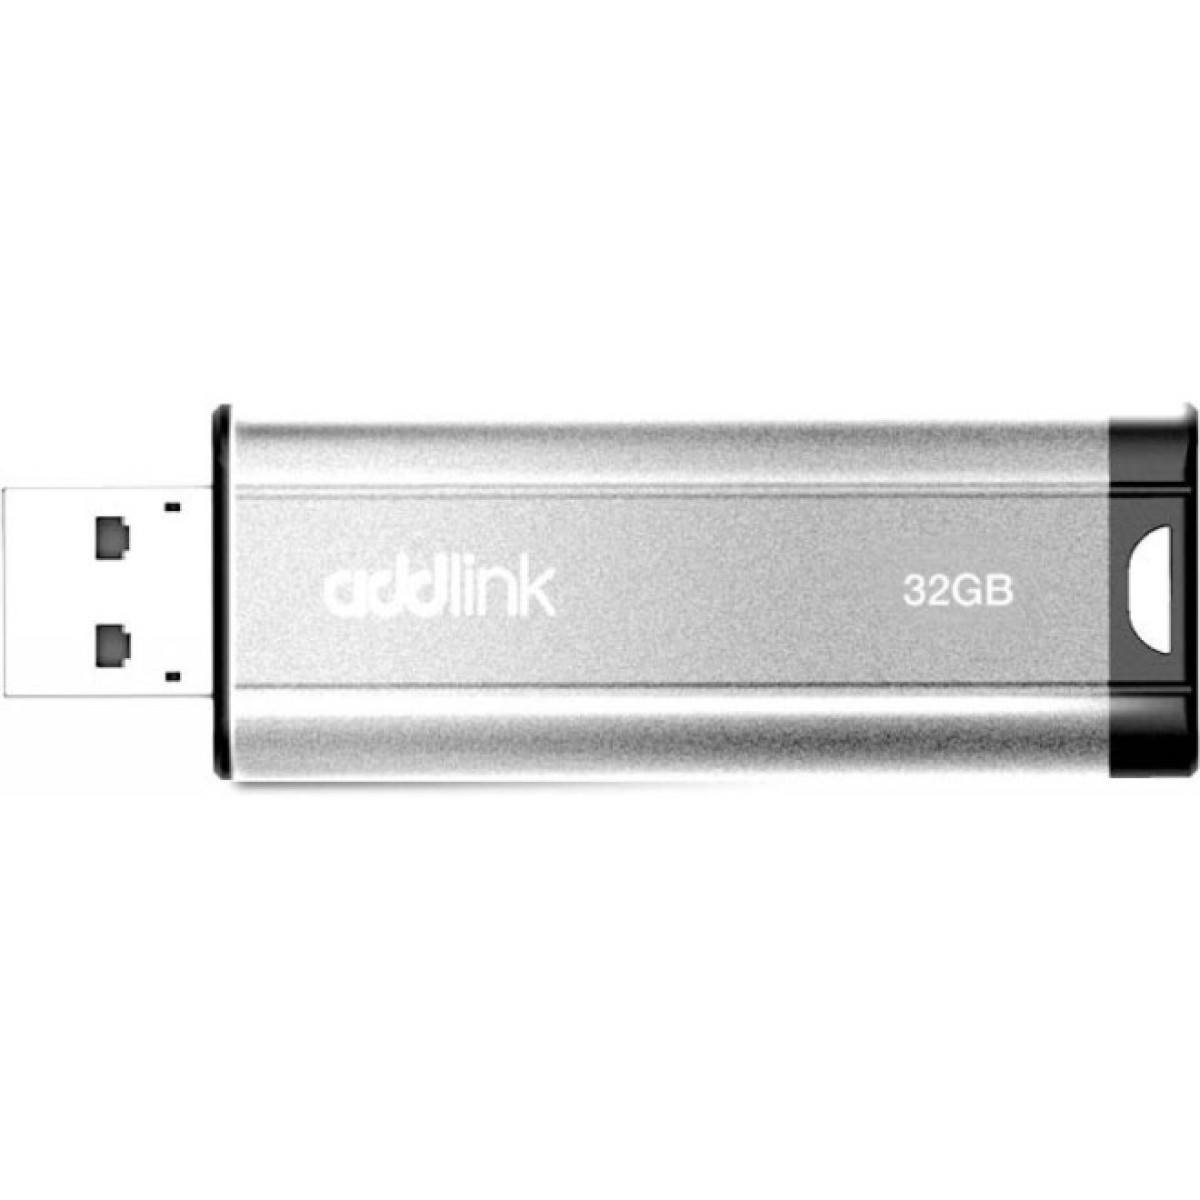 USB флеш накопитель AddLink 32GB U25 Silver USB 2.0 (ad32GBU25S2) 256_256.jpg